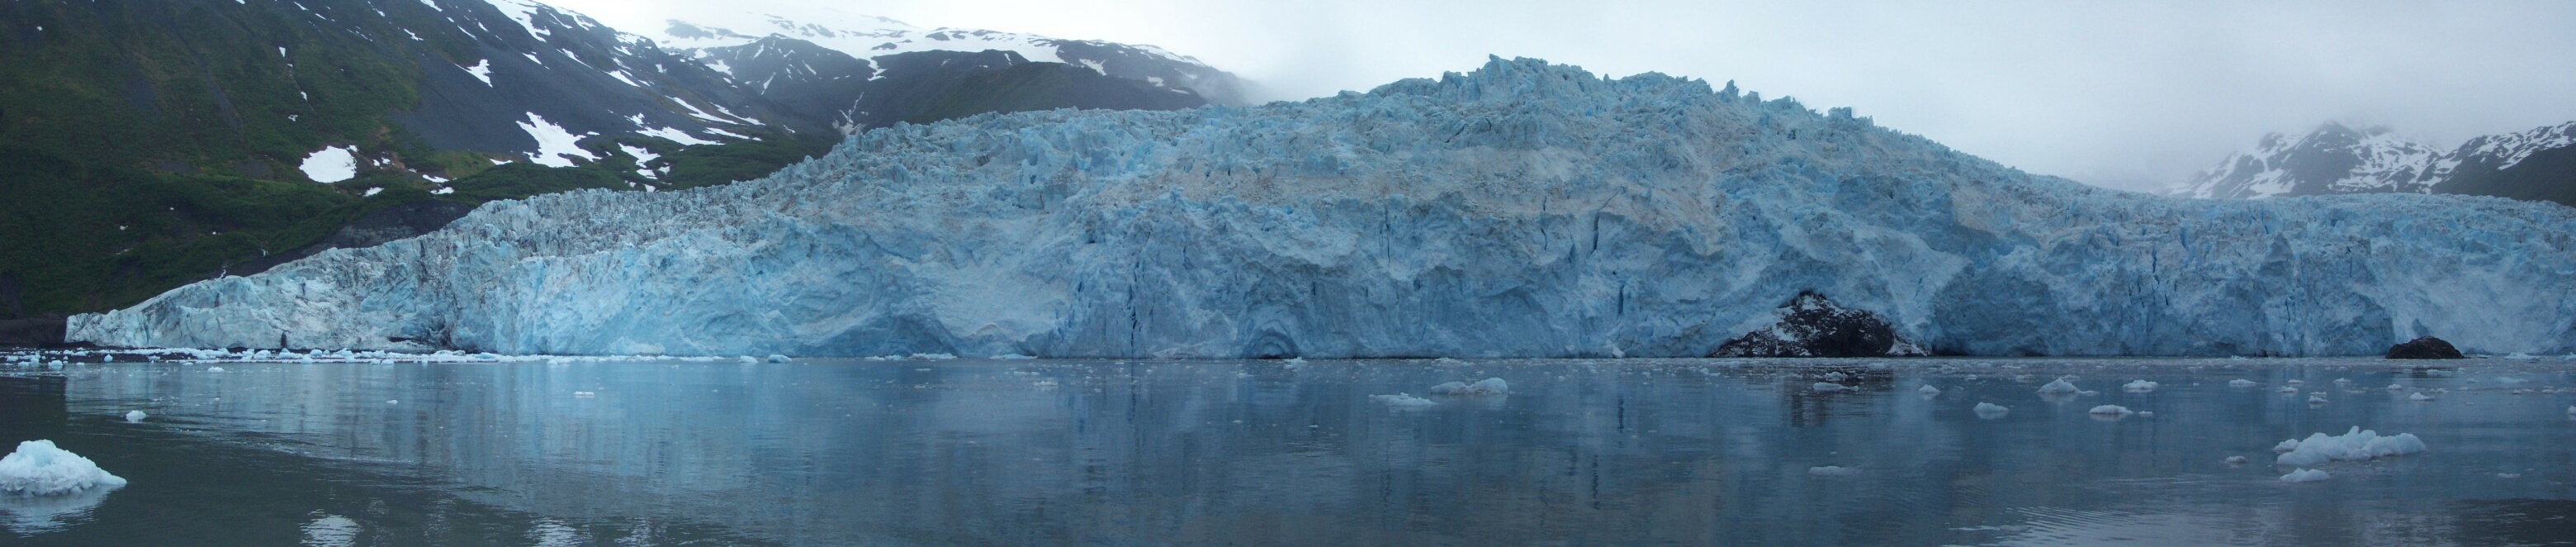 pano6_resized_crop_aialik_glacier_panoramic_180.jpg